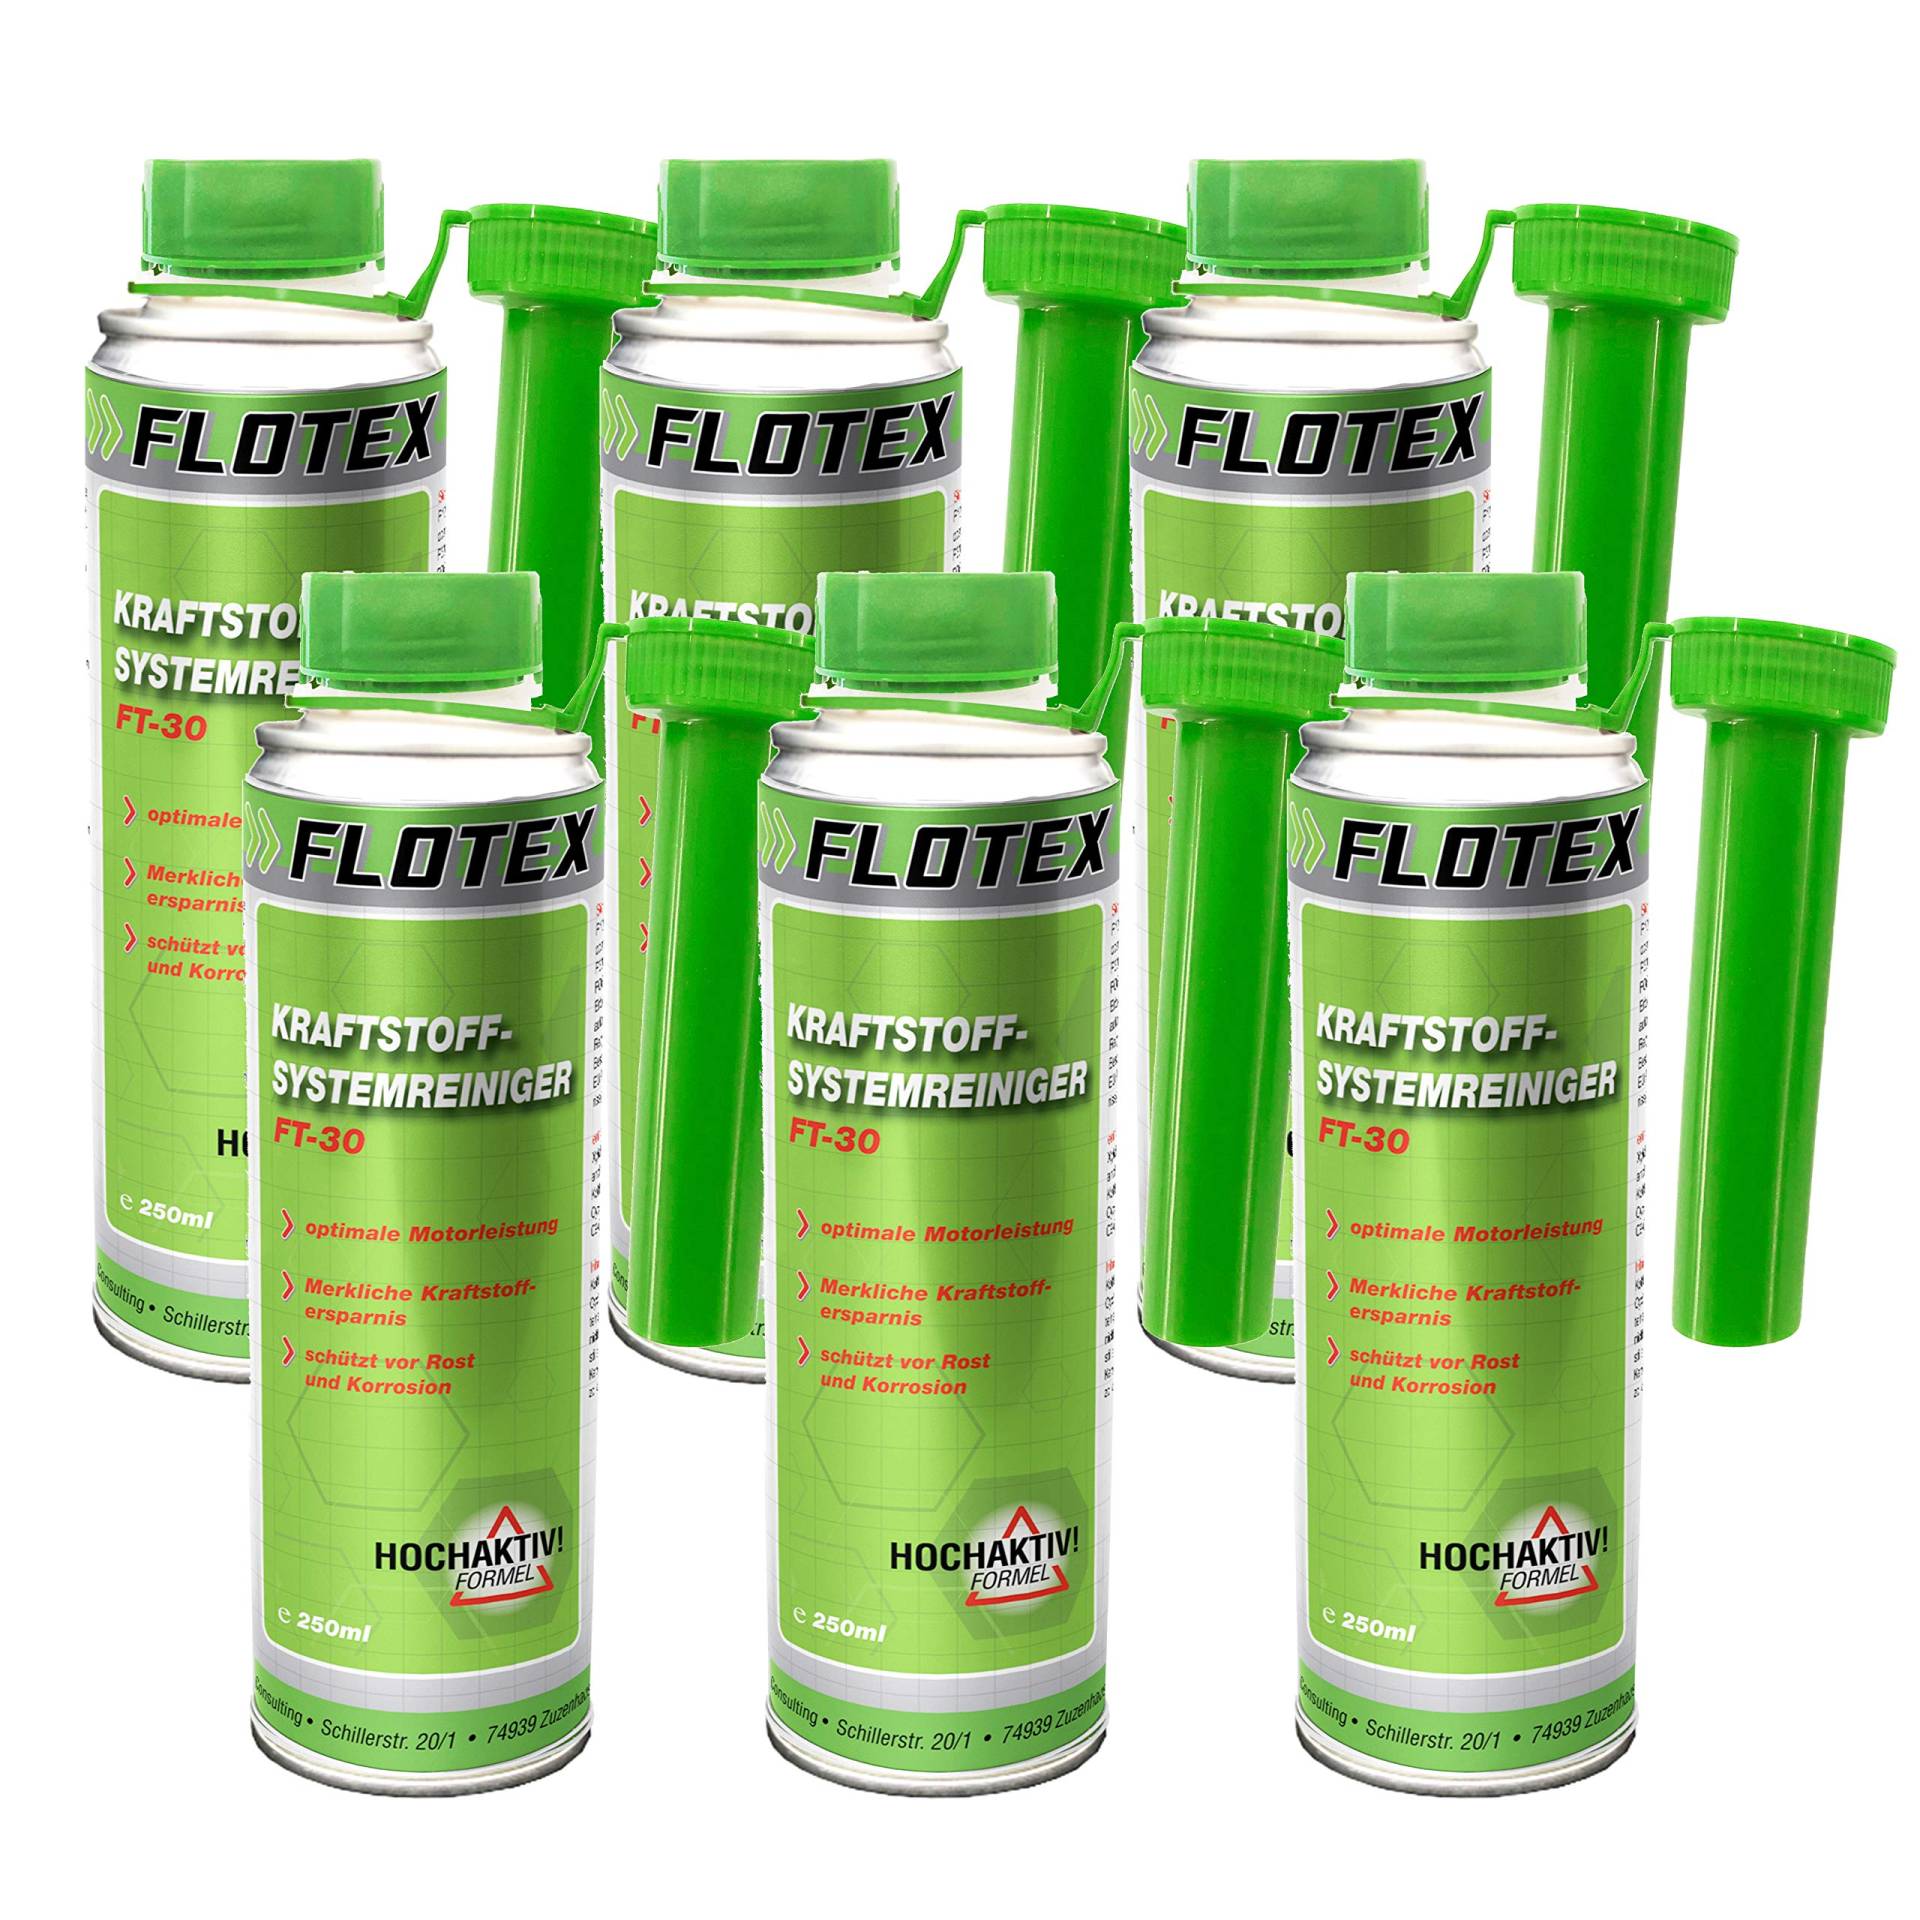 Flotex Kraftstoffsystemreiniger, 6 x 250ml Additiv Reiniger Kraftstoff-System von Flotex